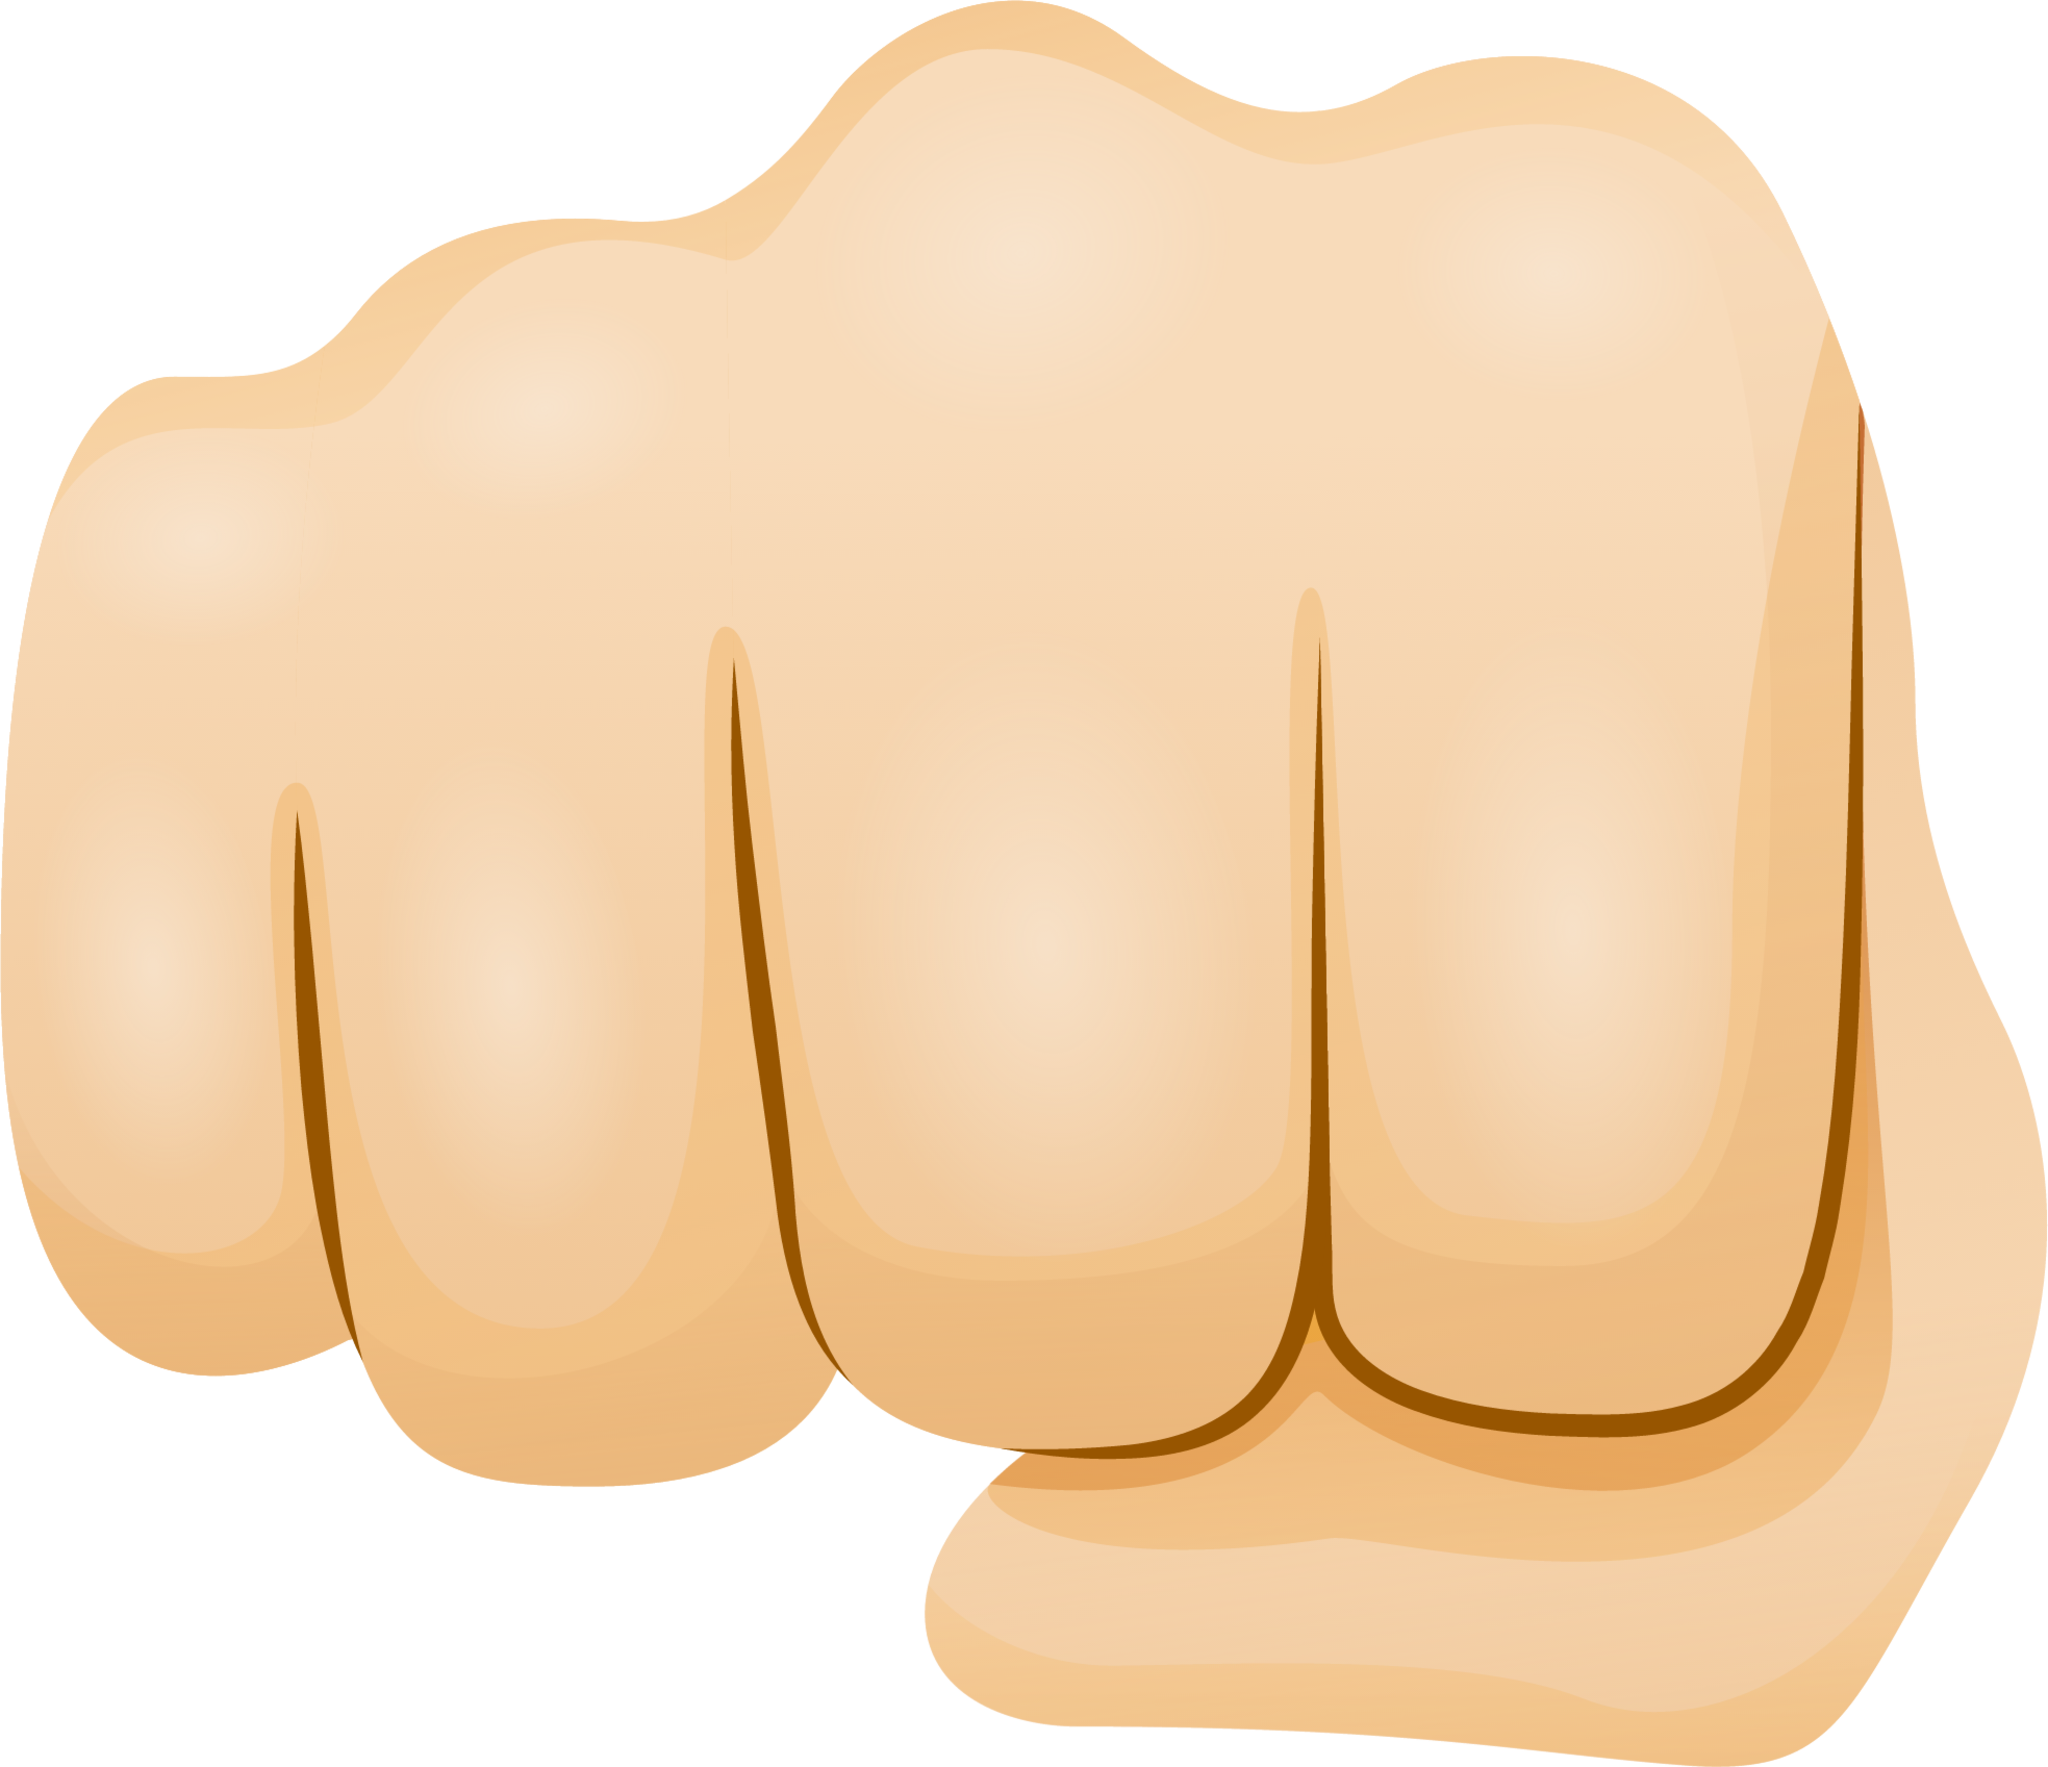 Oncoming fist skin 1 emoji emoji